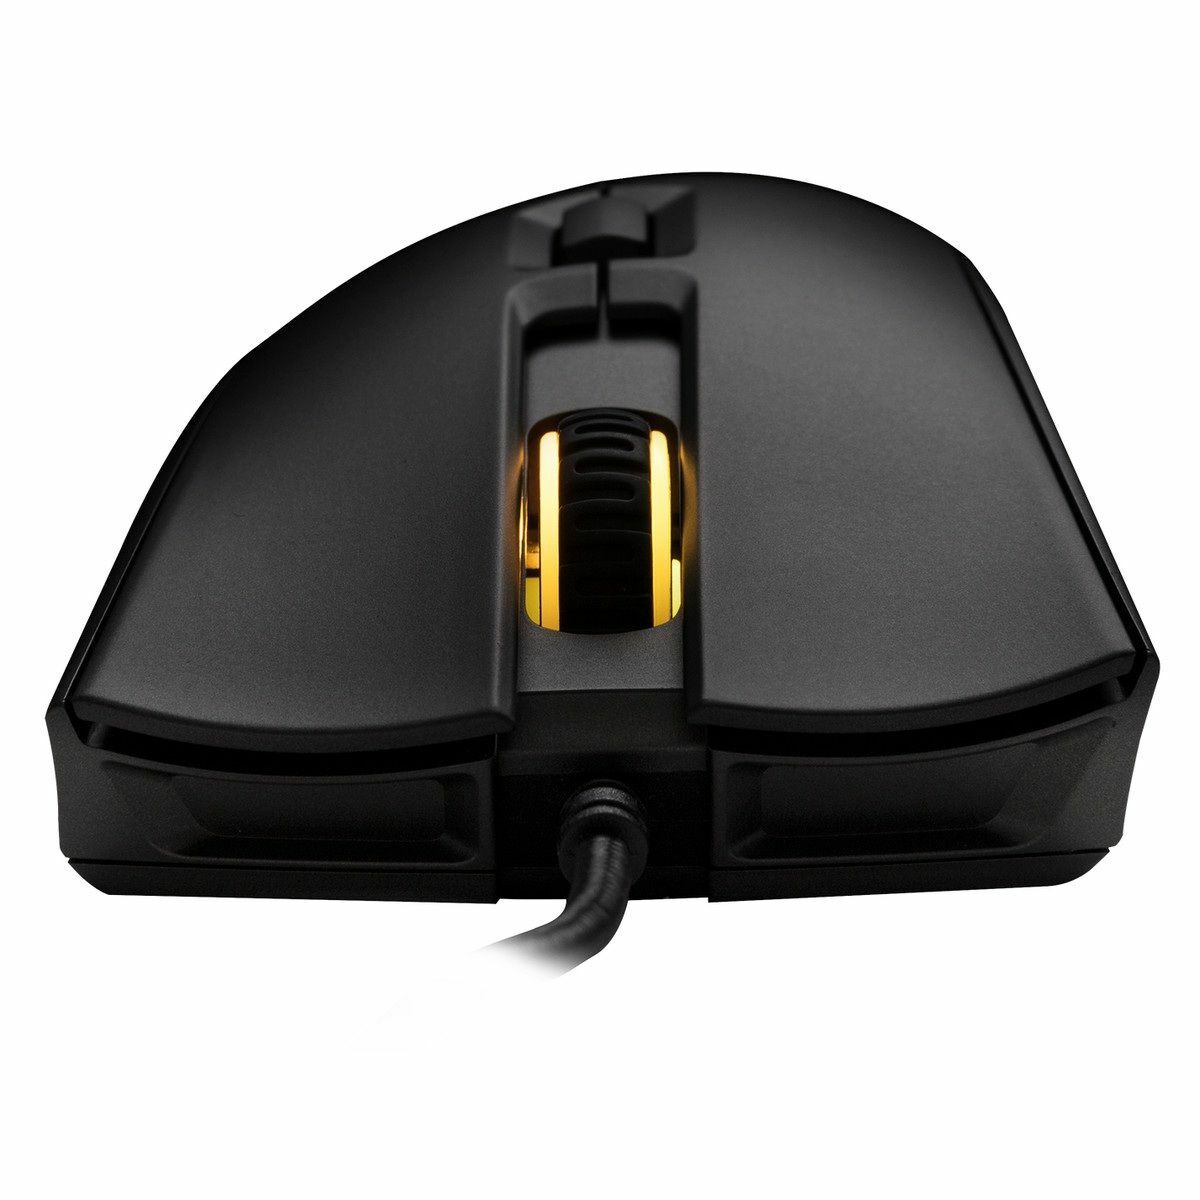 HyperX Pulsefire PRO Gaming Mouse / Black